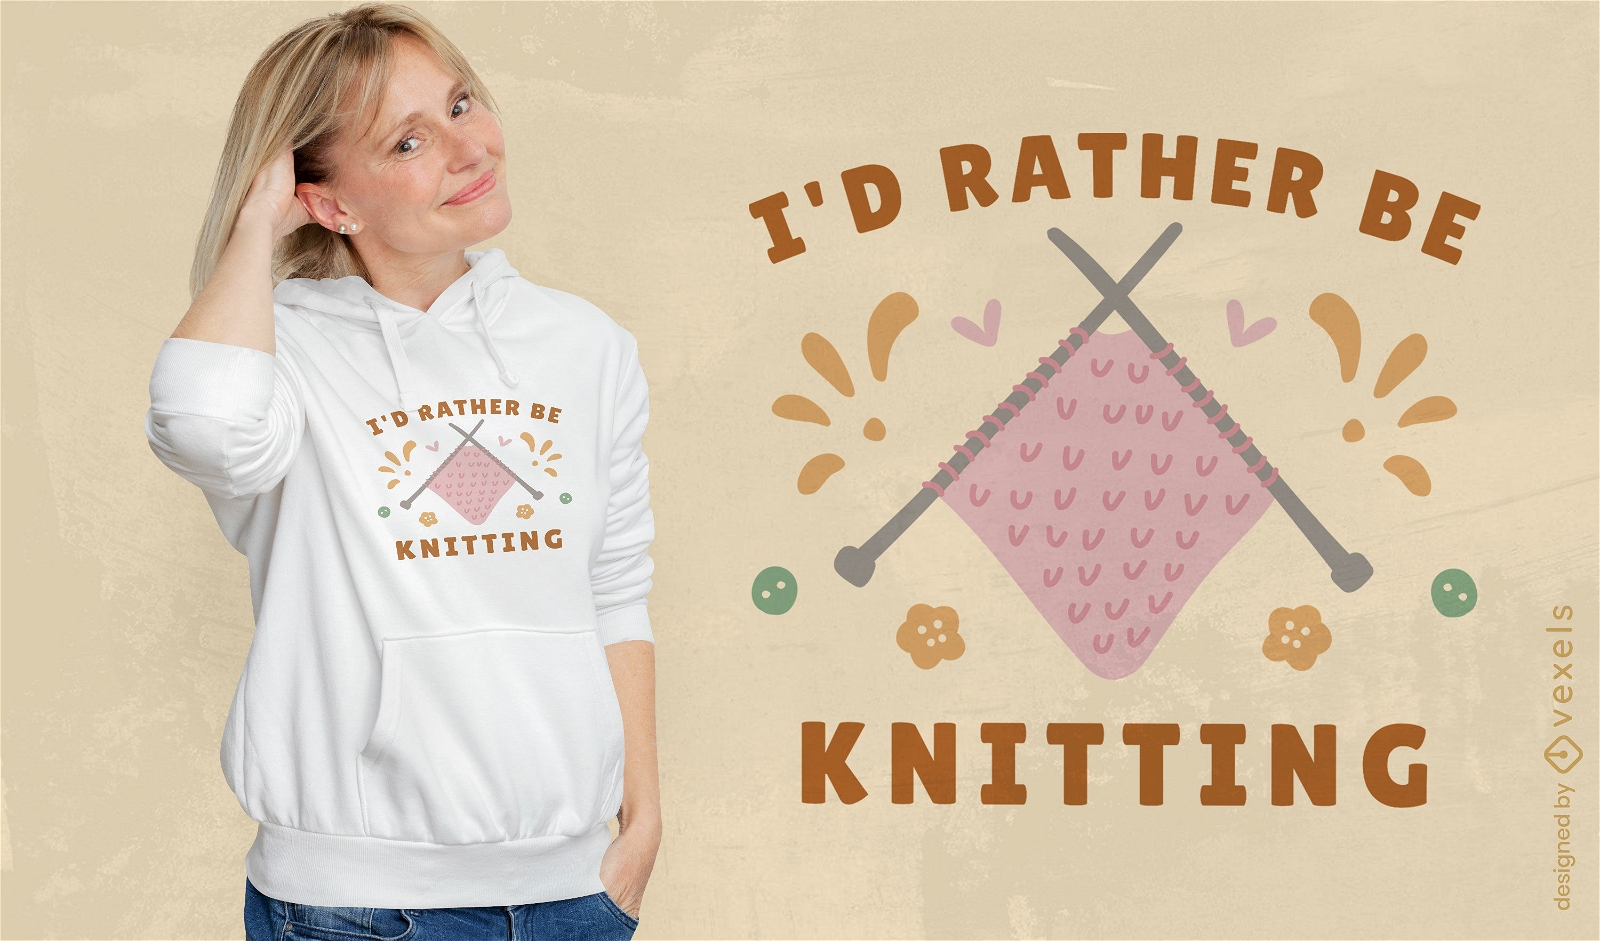 I'd rather be knitting t-shirt design